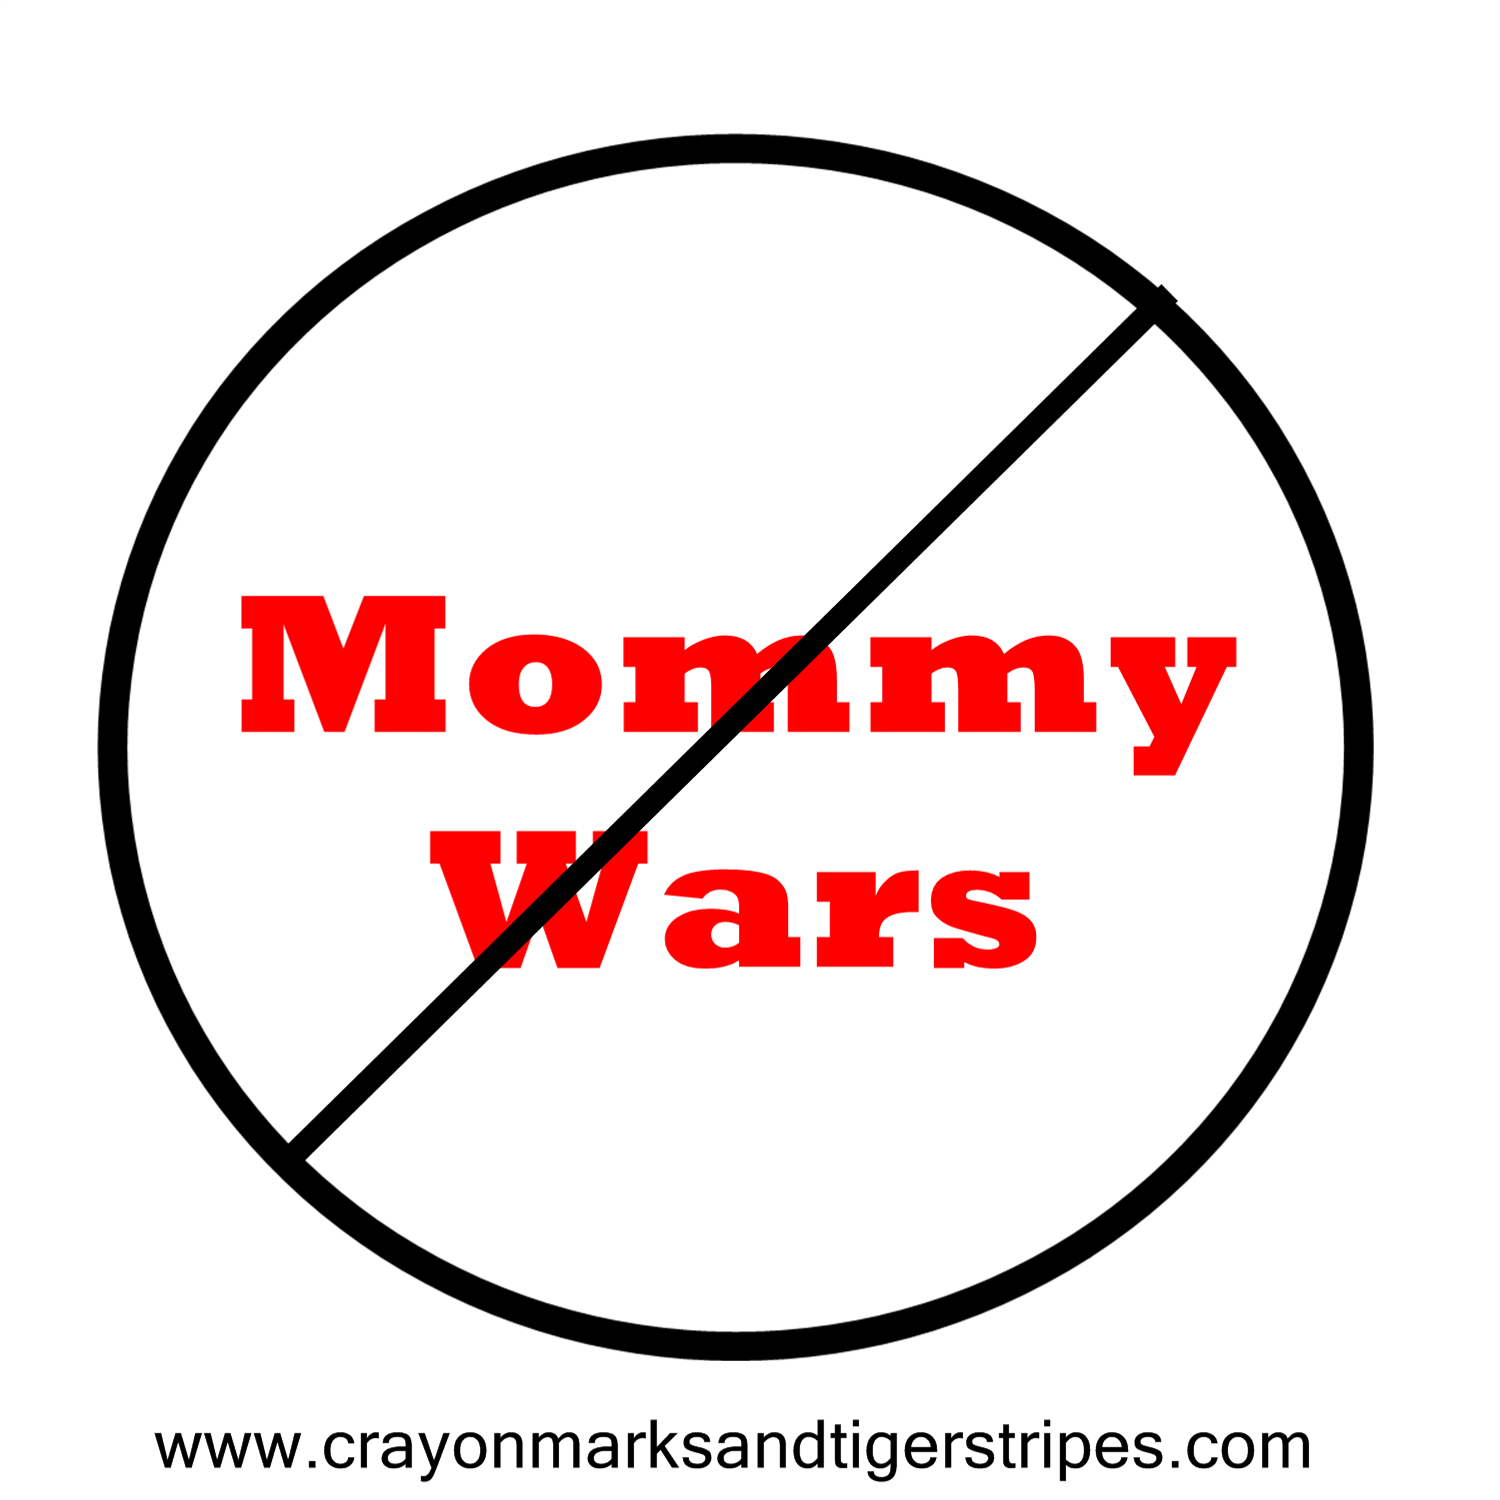 mommy wars